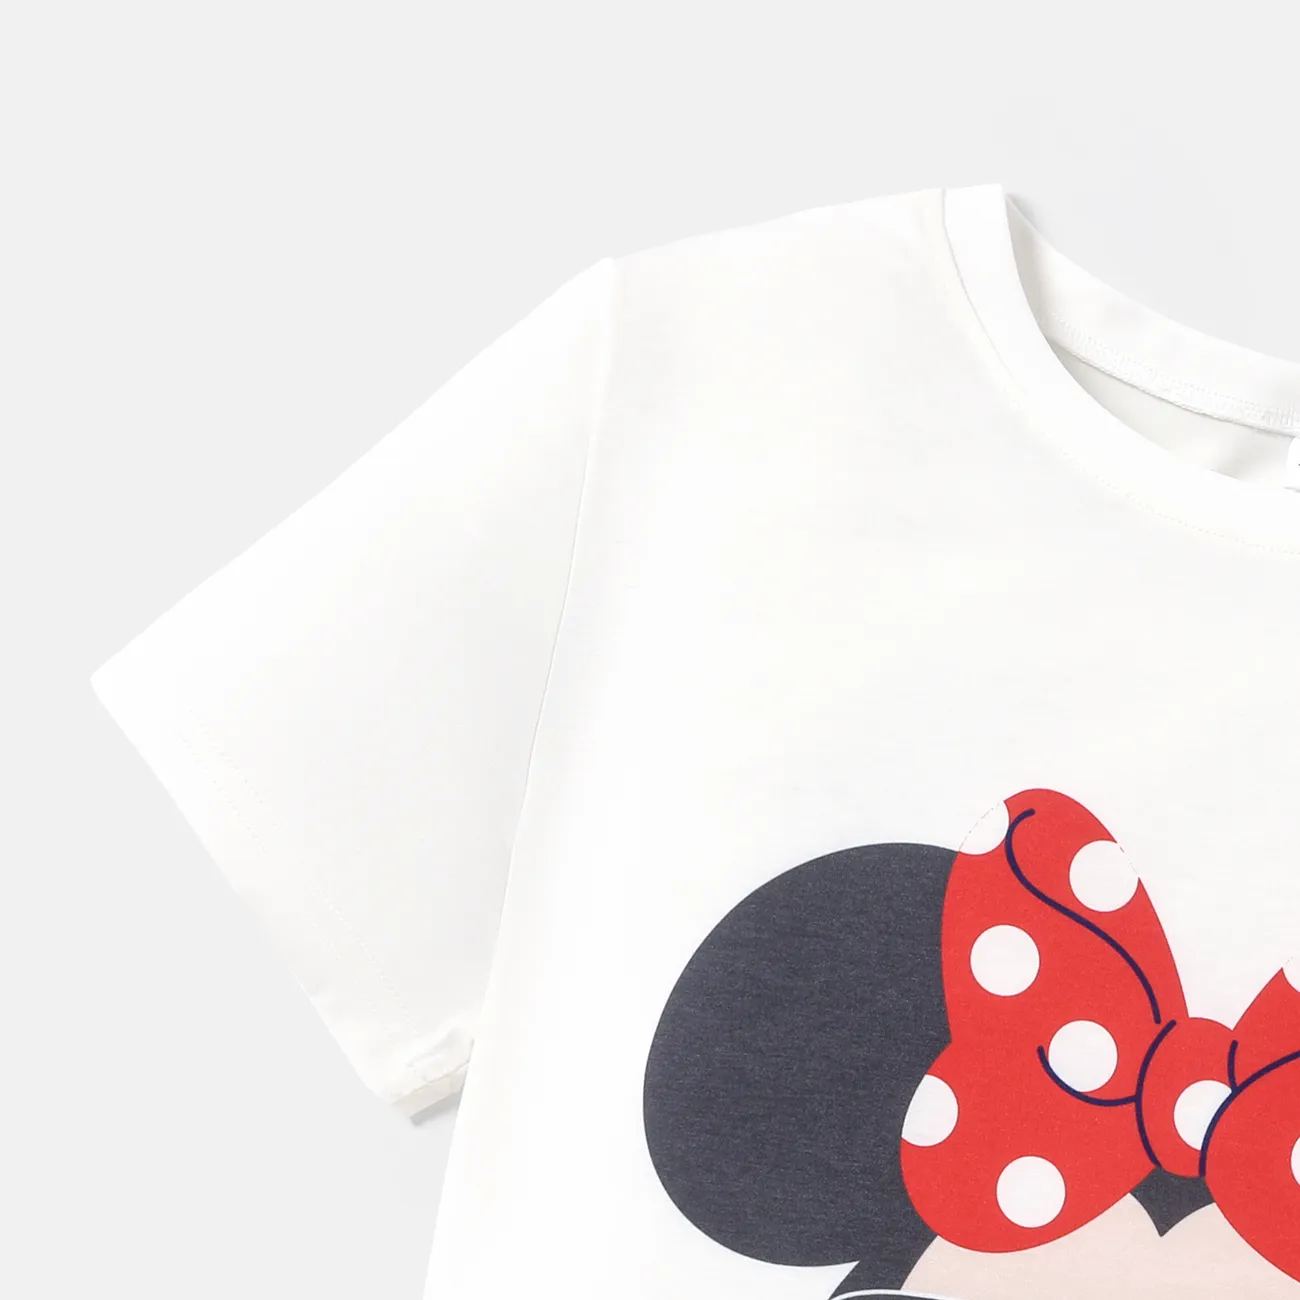 Disney Mickey and Friends 全家裝 母親節 短袖 親子裝 上衣 白色 big image 1